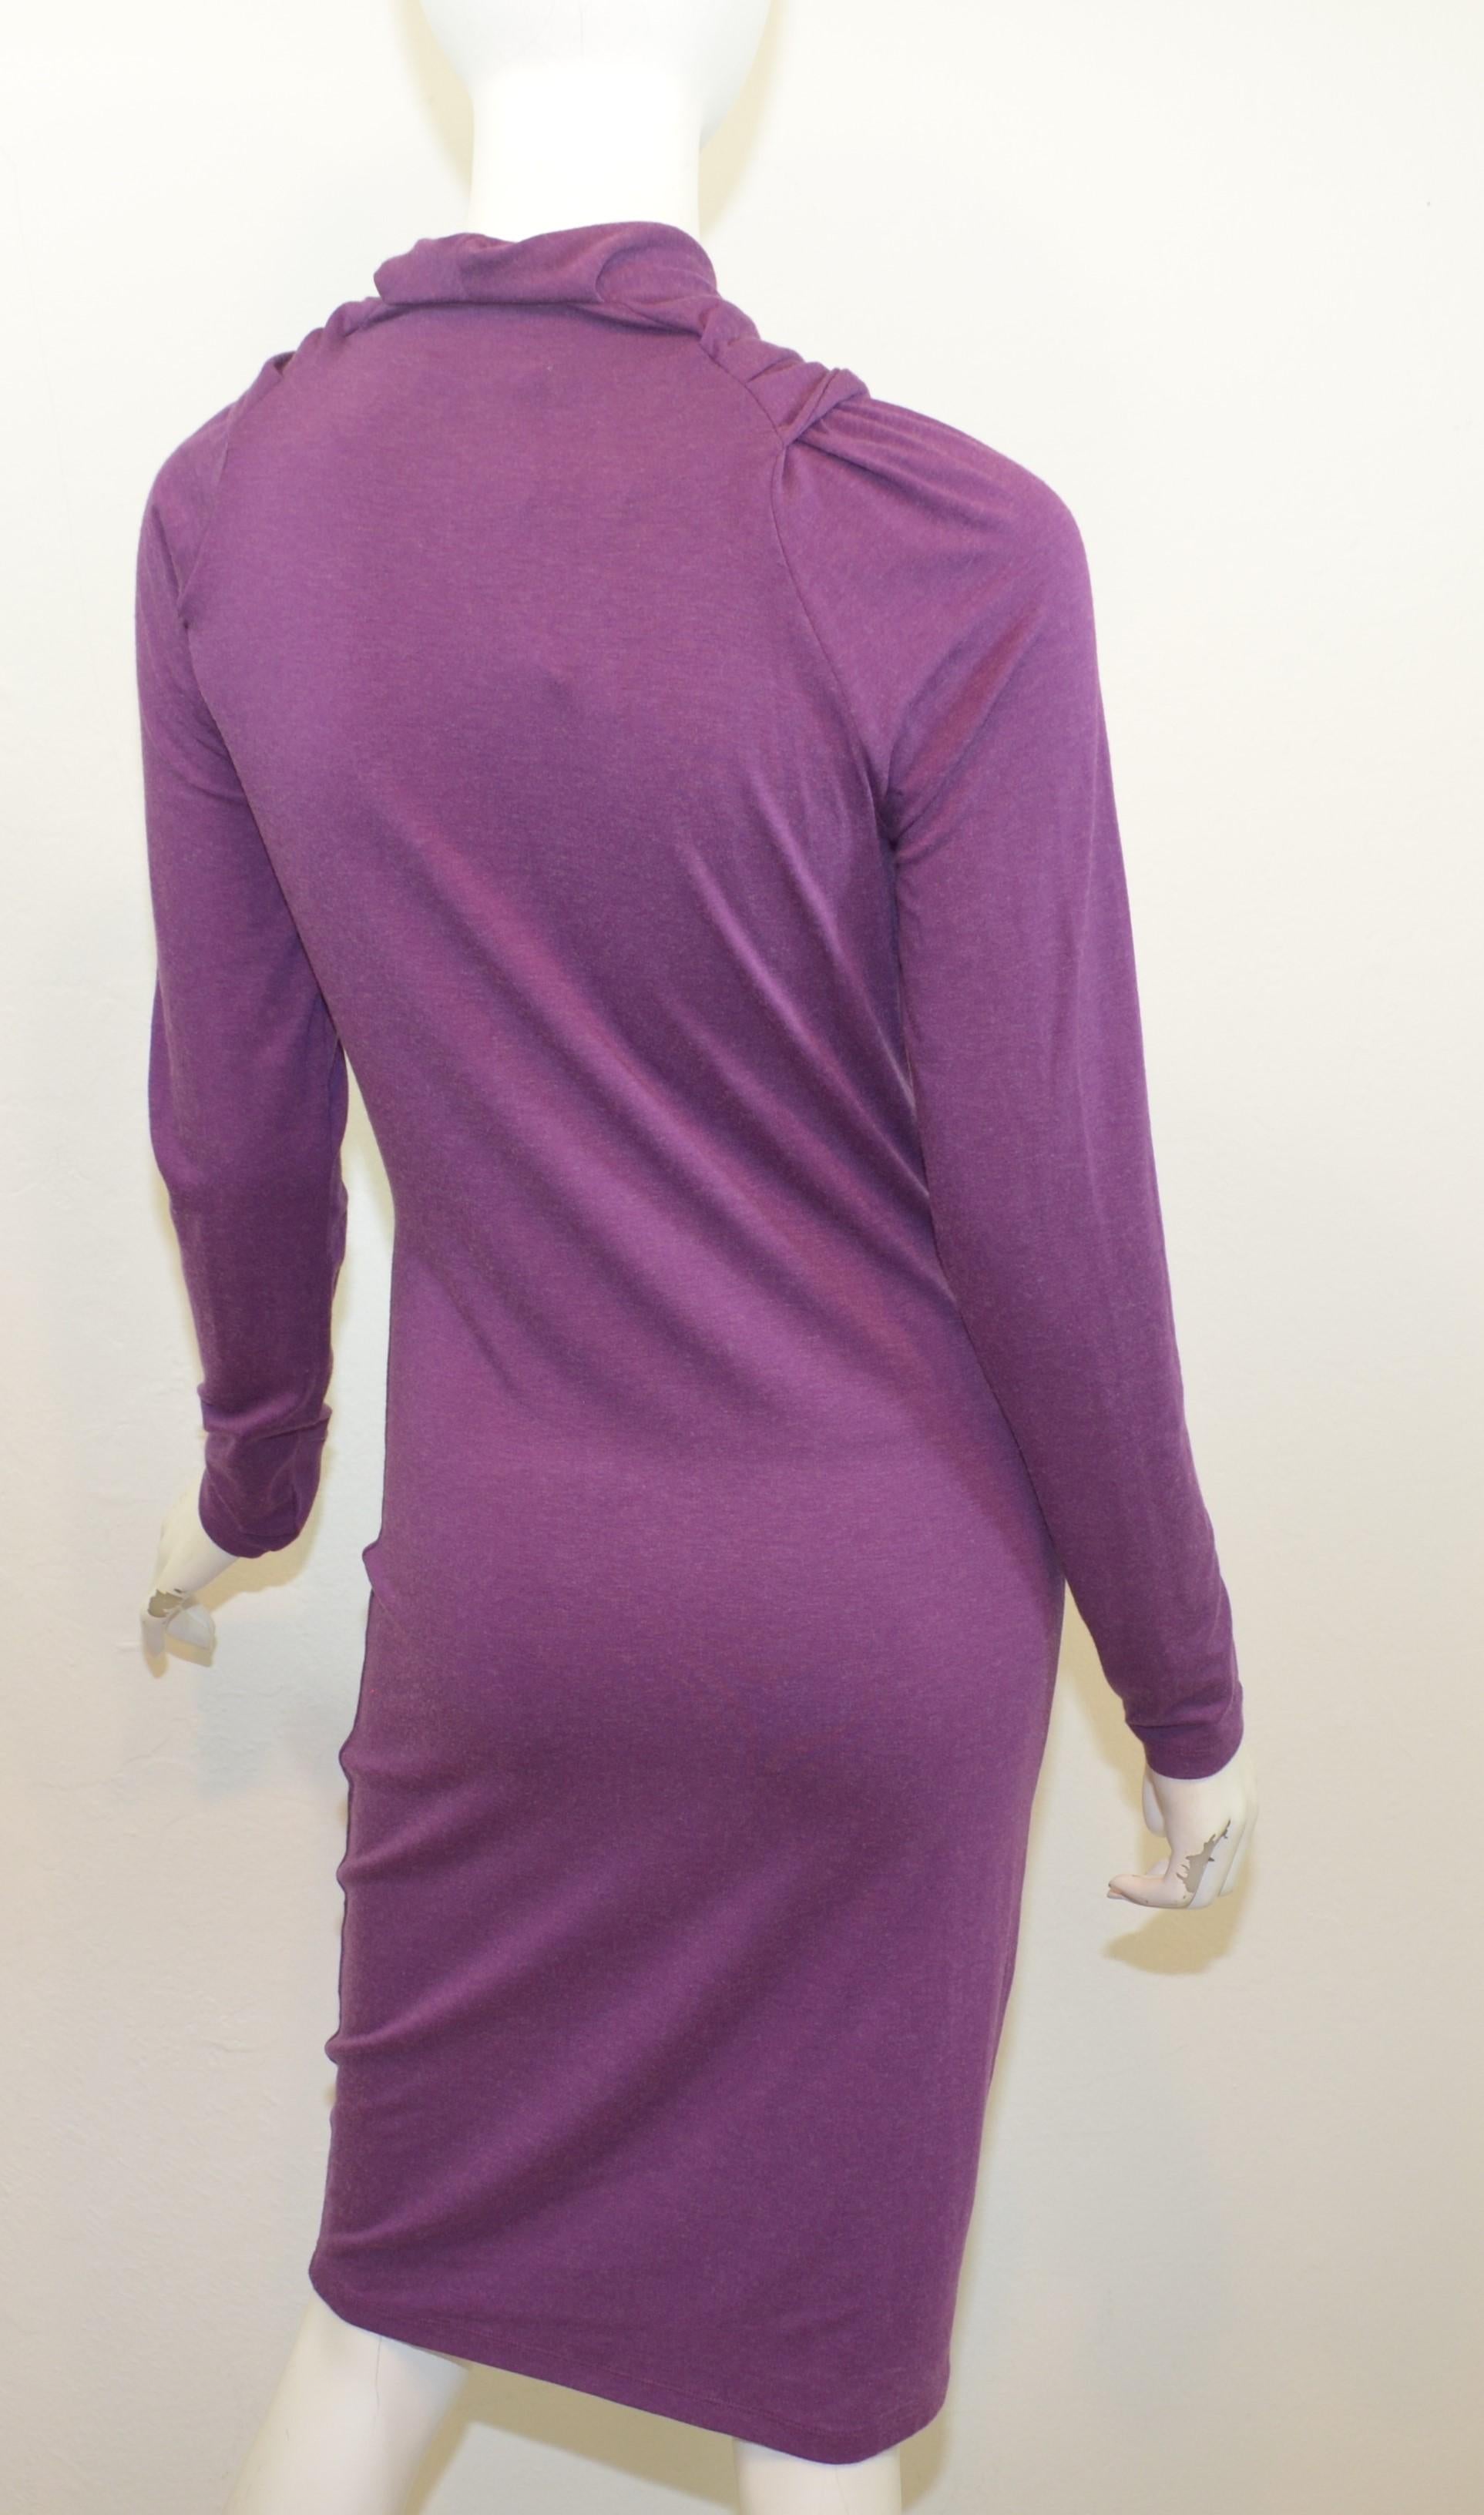 Women's Alexander McQueen Purple Dress with Cut Out Shoulders